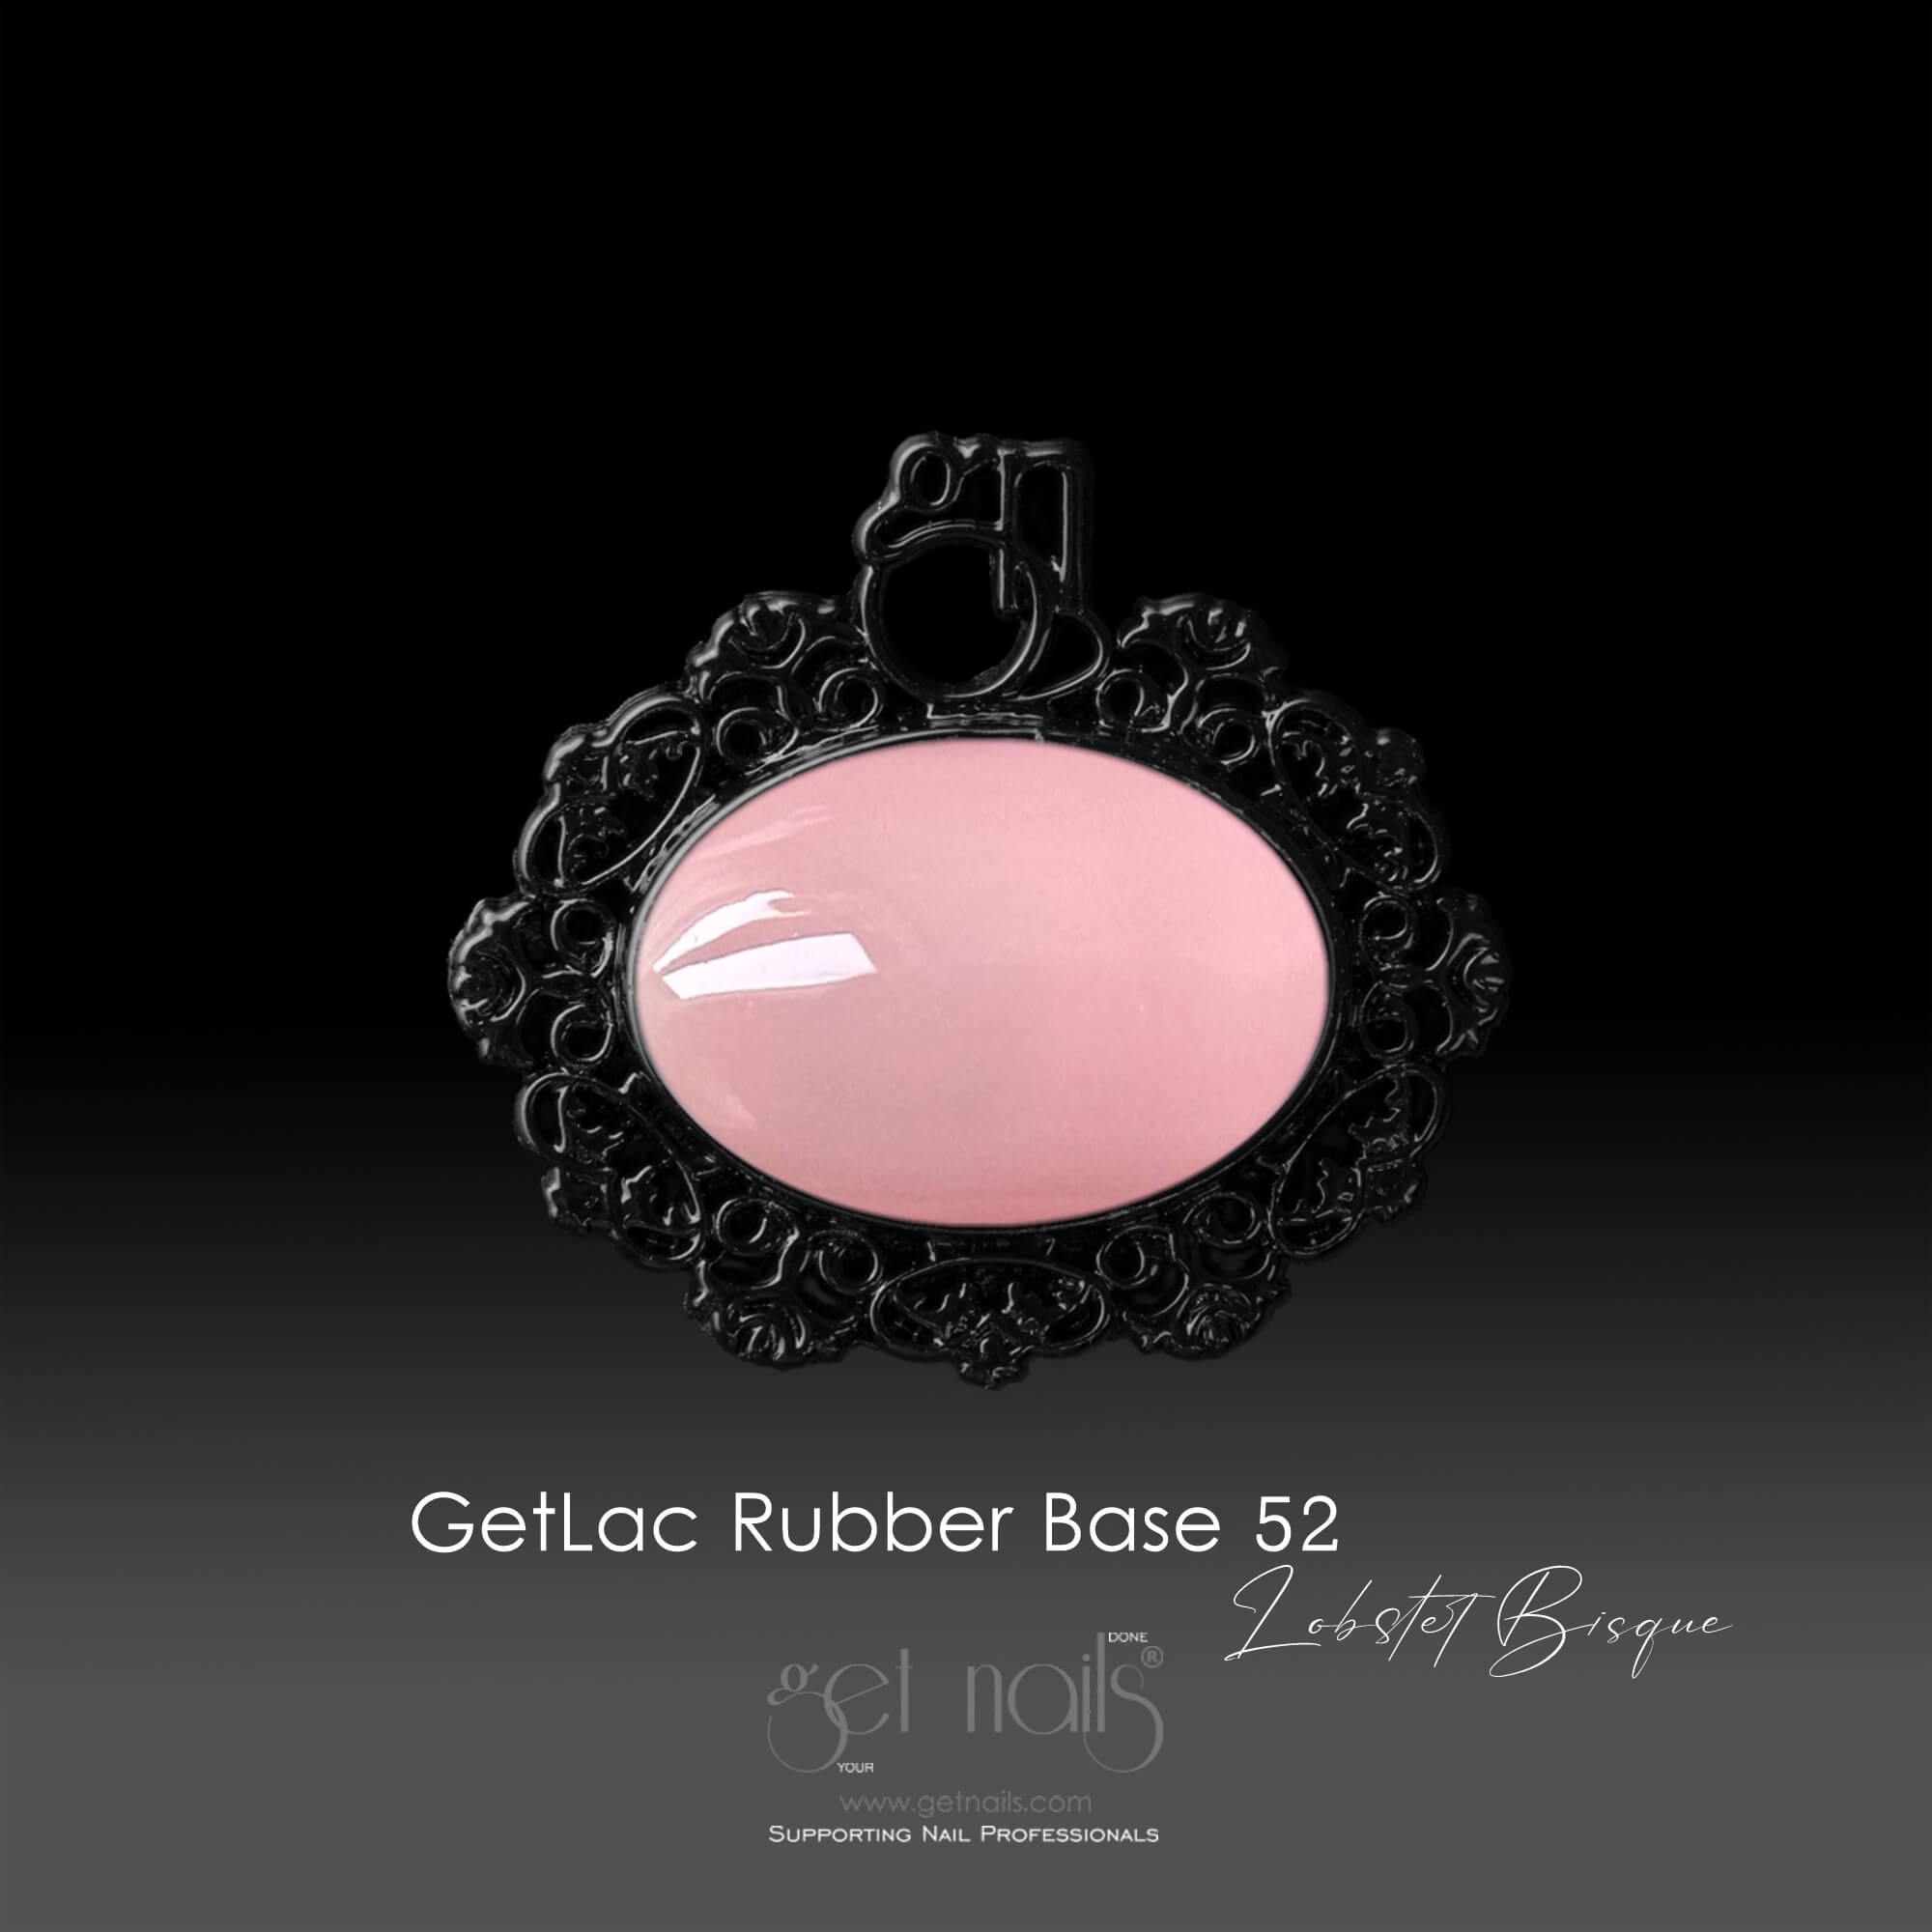 Get Nails Austria - GetLac Rubber Base 52 Lobster Bisque